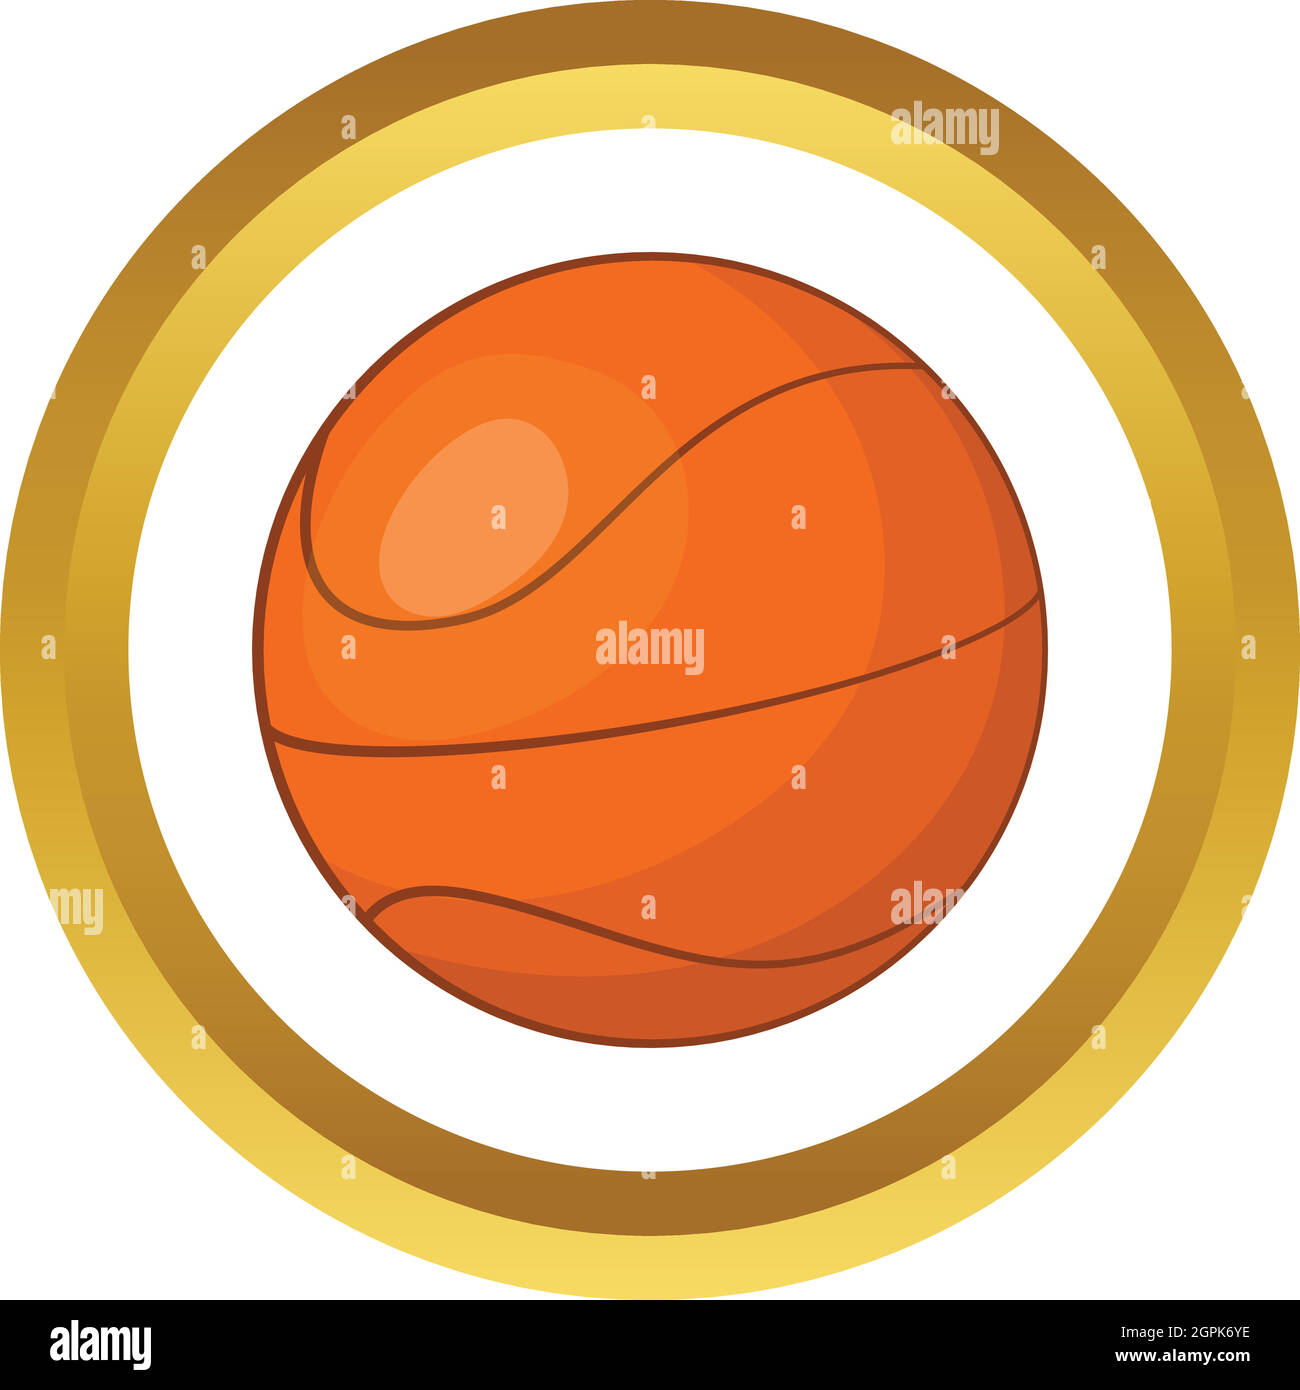 Basketball team circle seal logo design with basket ball and ring  illustration Stock Vector